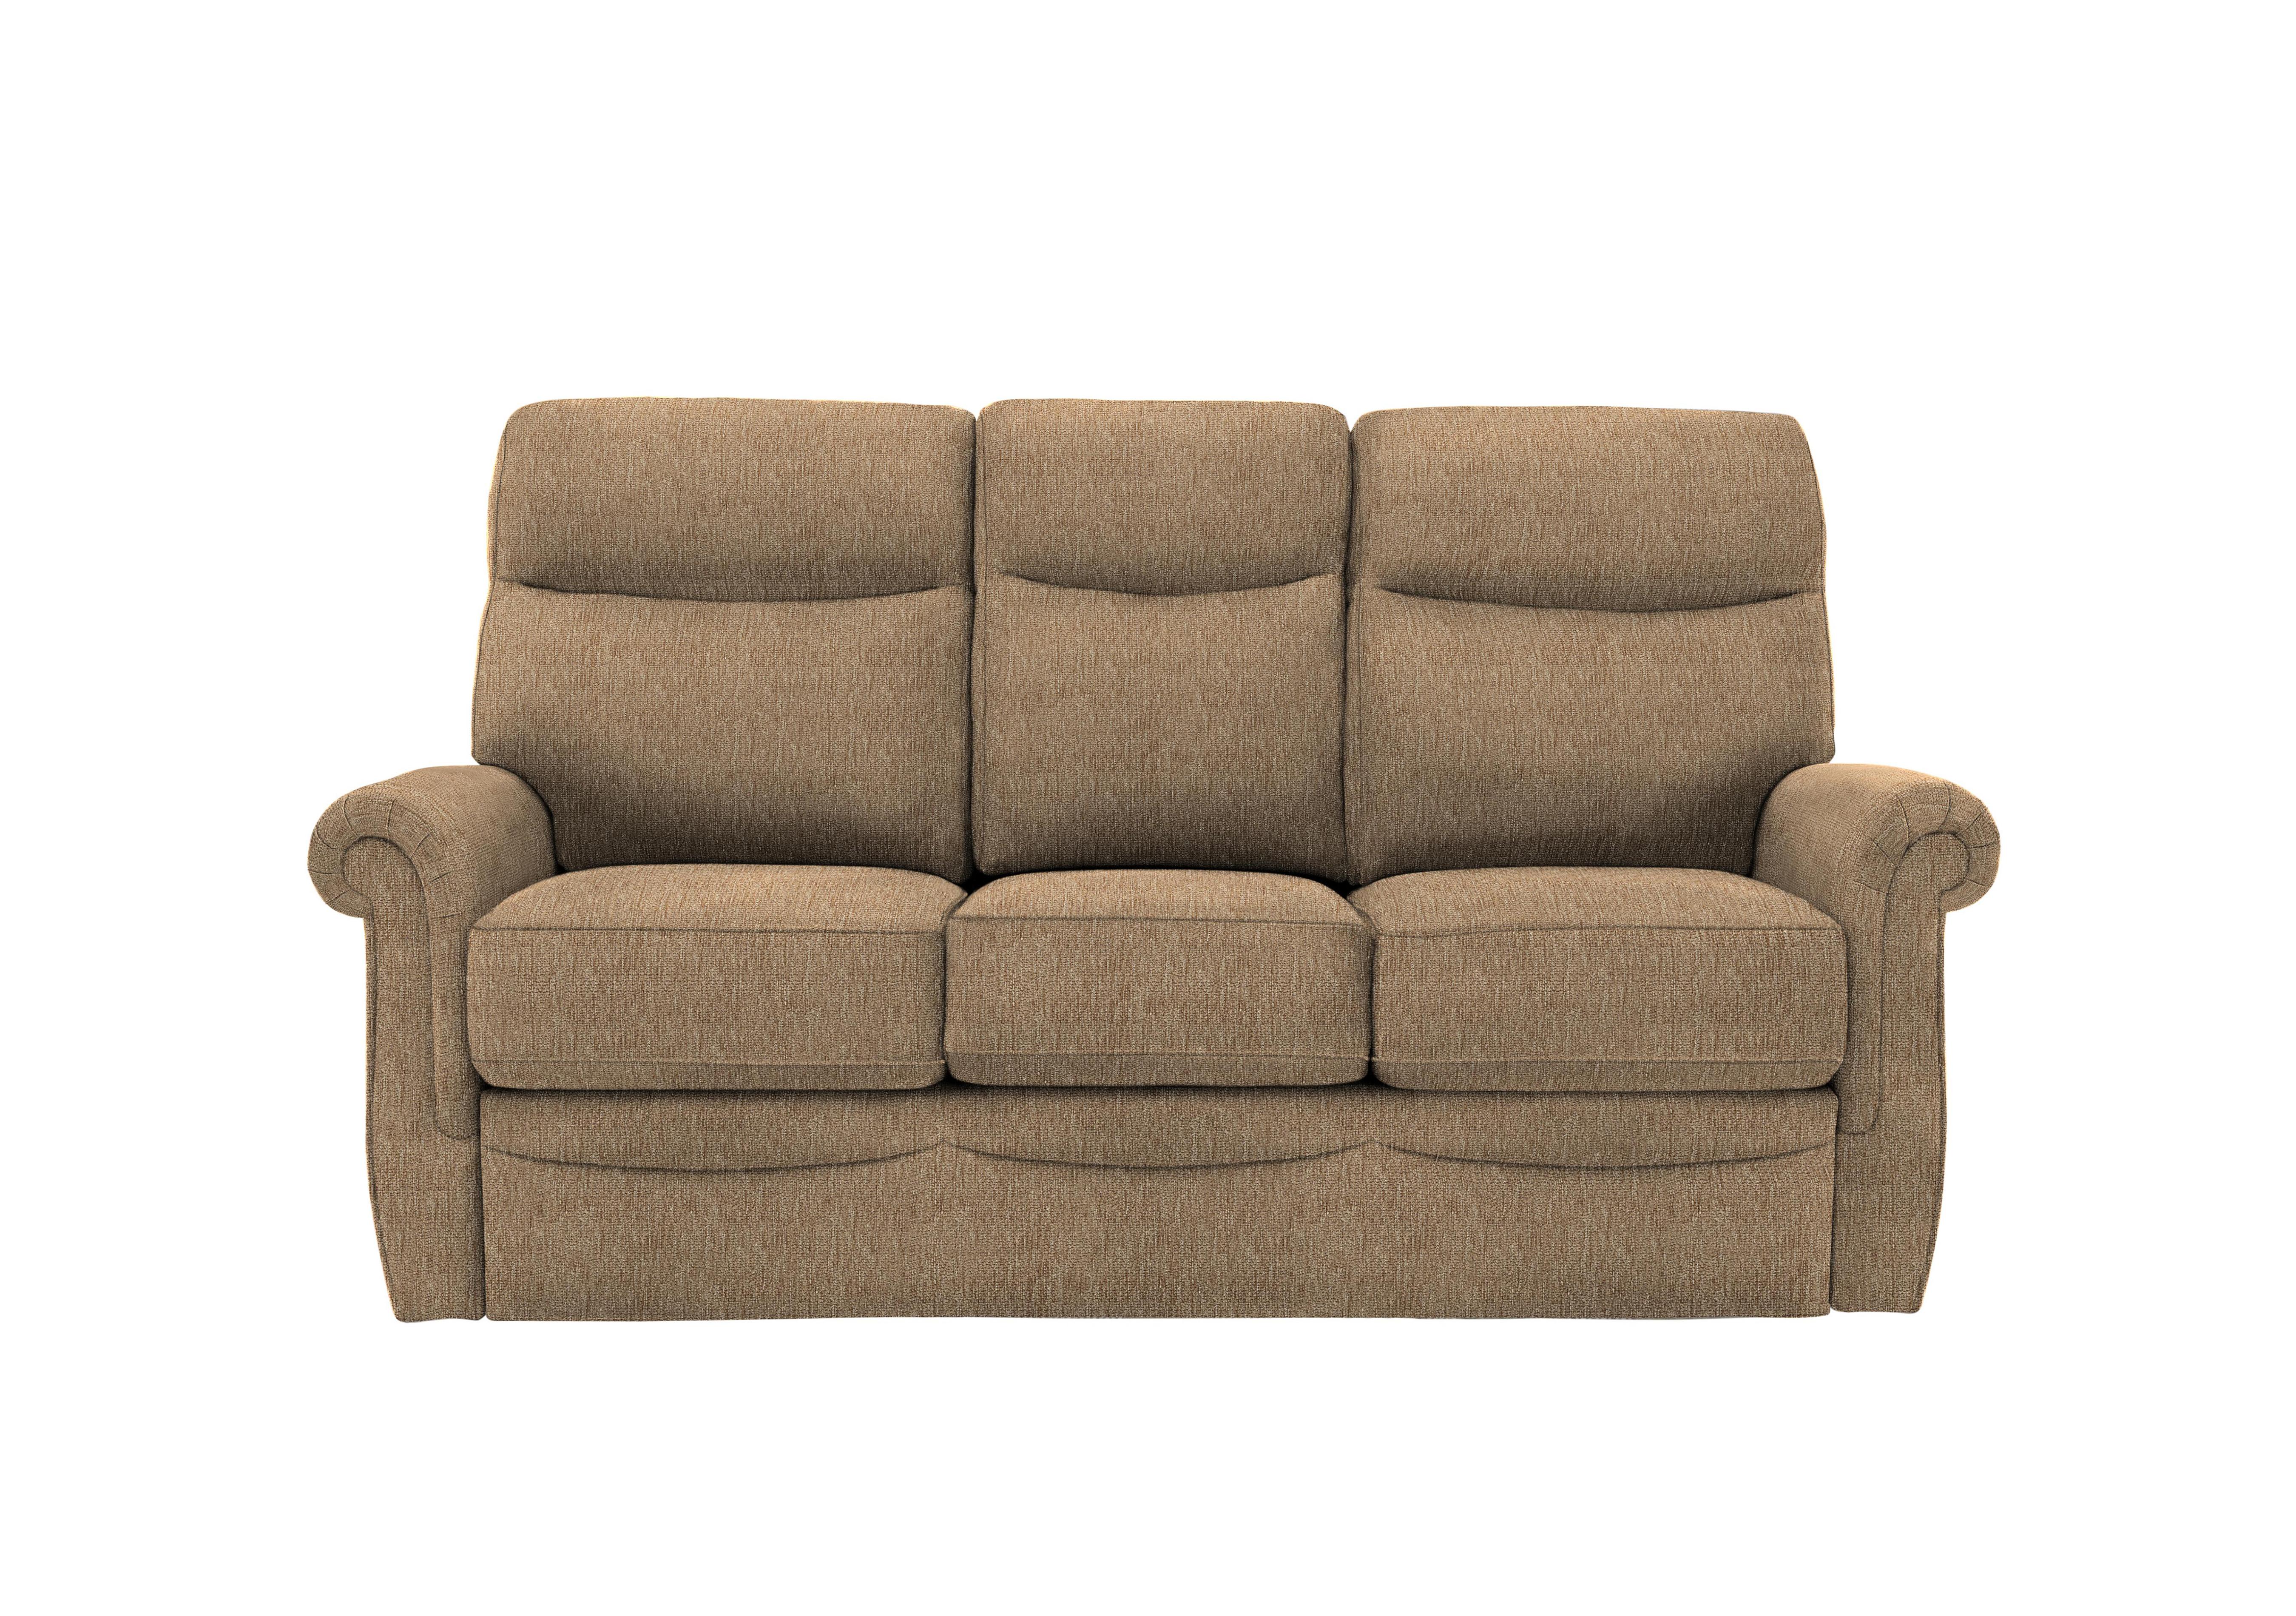 Avon Small 3 Seater Fabric Sofa in A070 Boucle Cocoa on Furniture Village